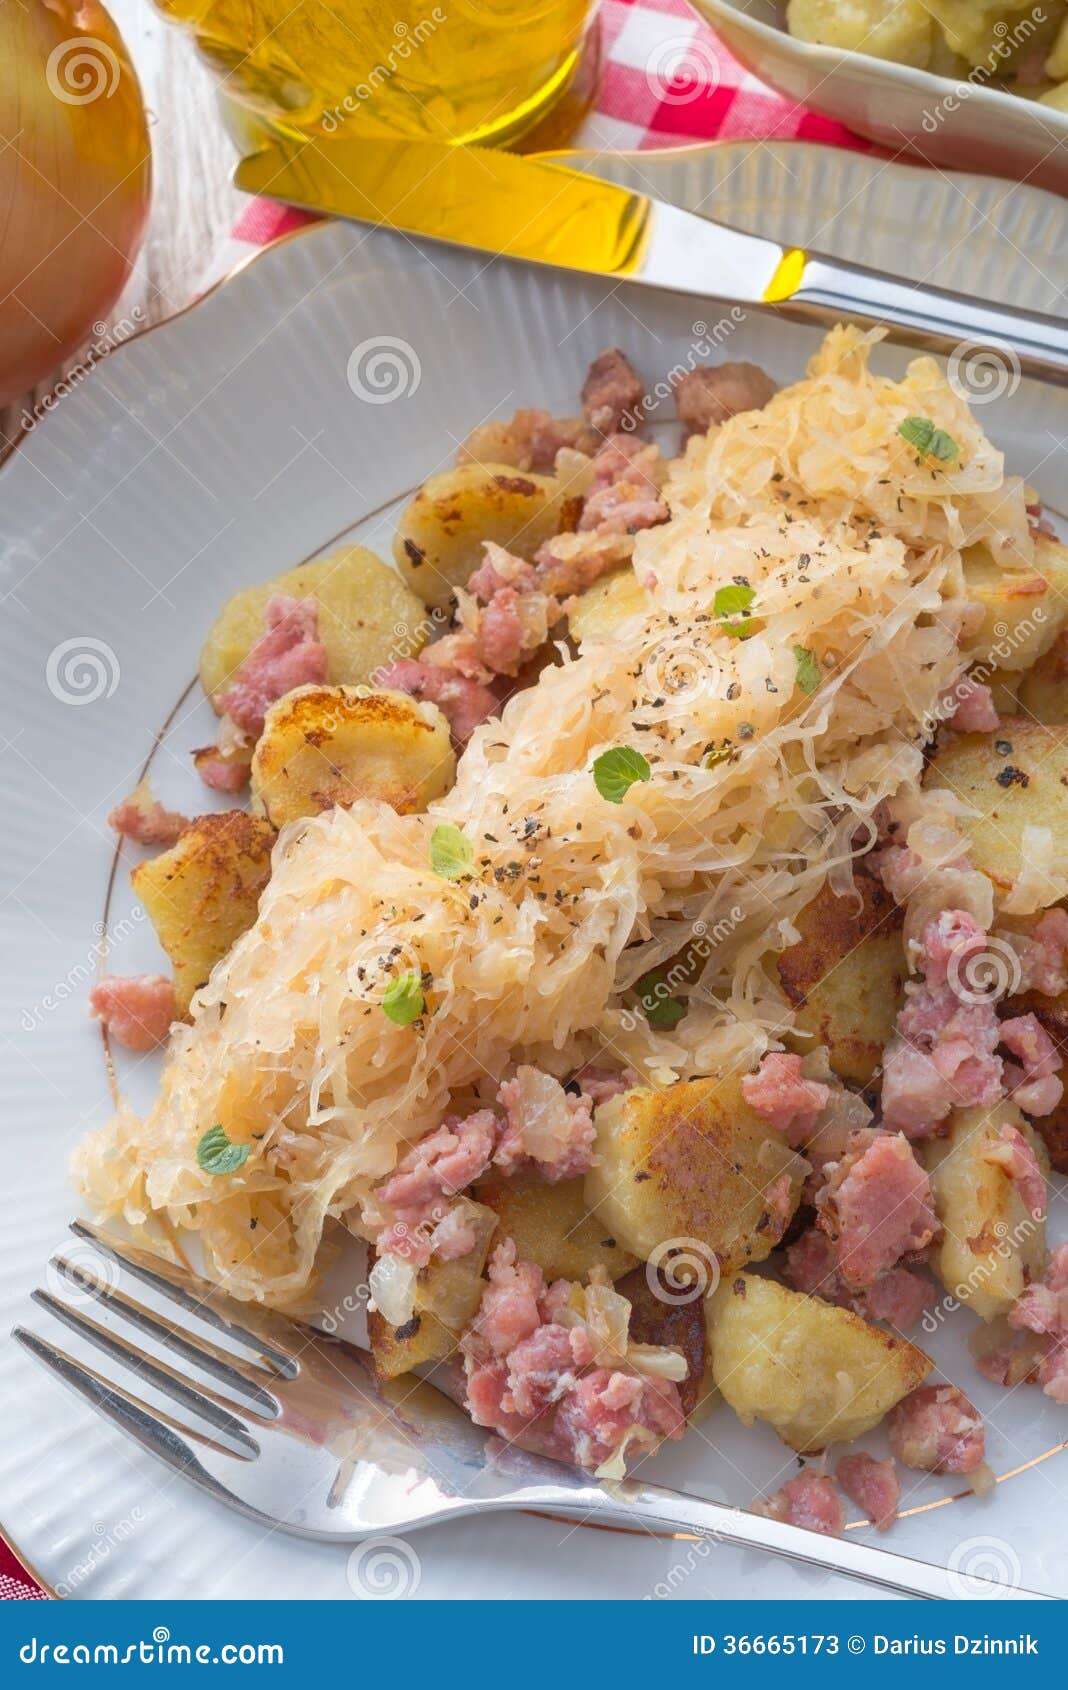 Sauerkraut dumplings stock image. Image of fried, bacon - 36665173